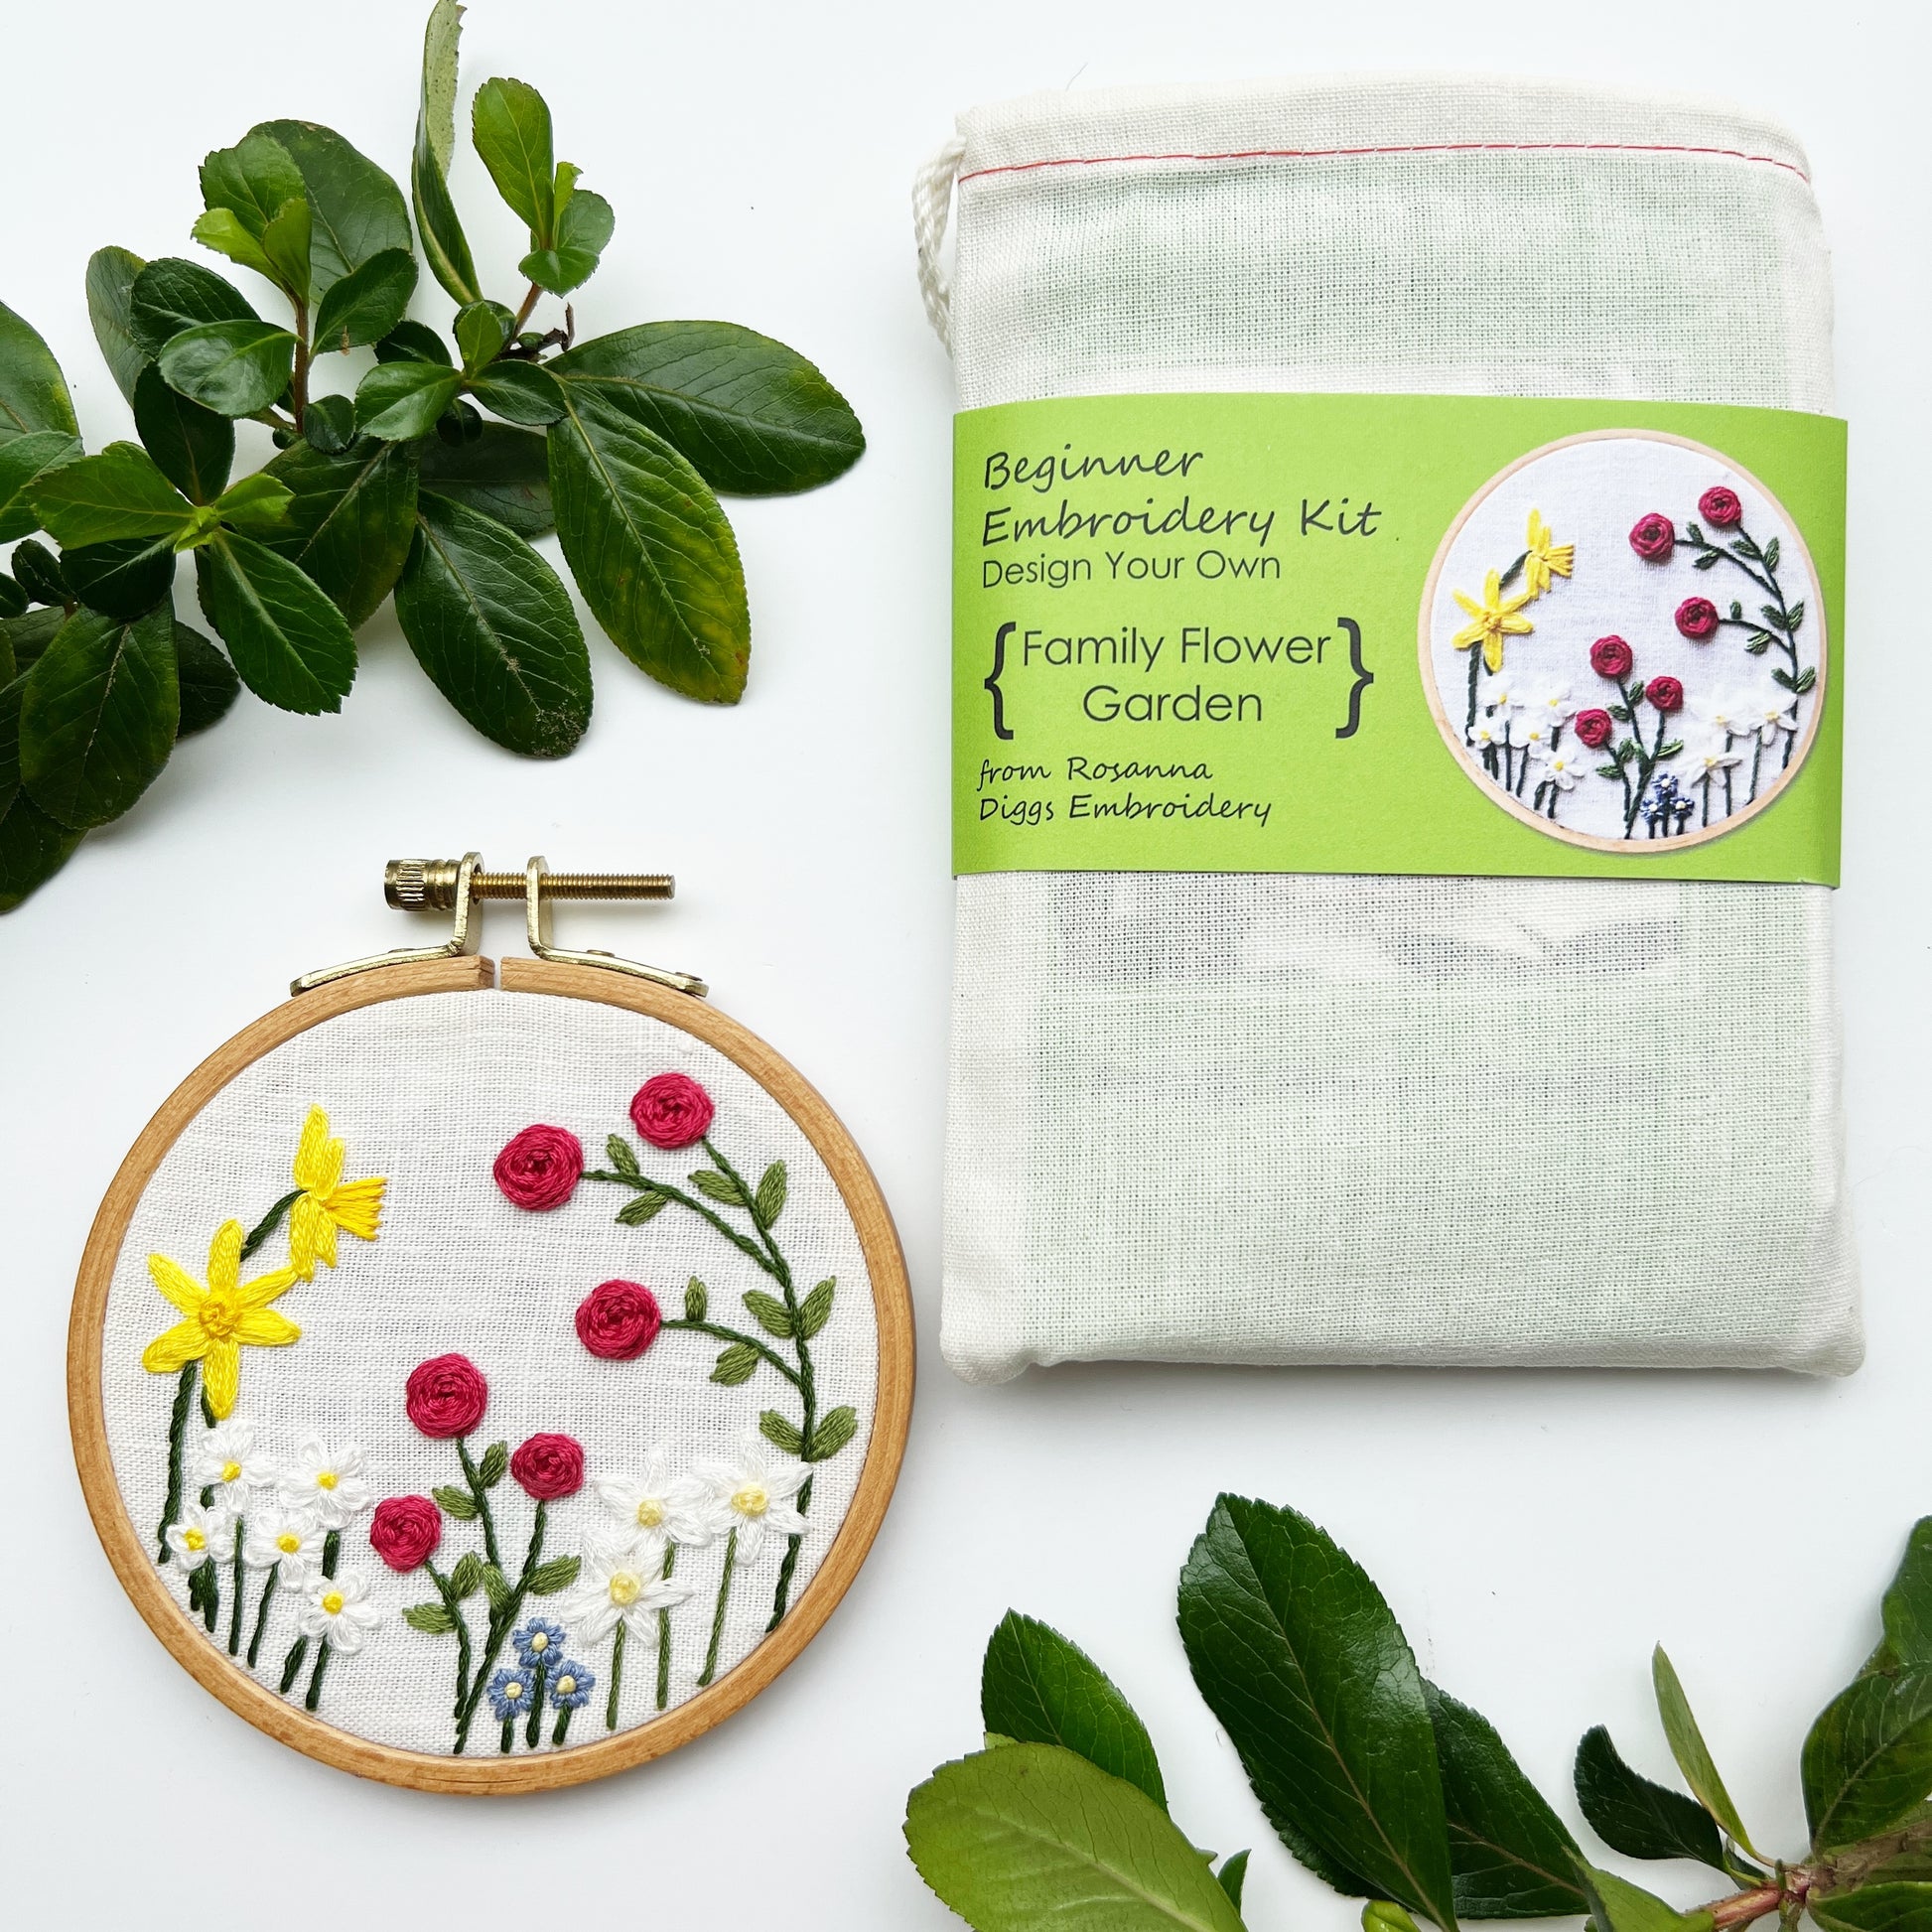 Family Flower Garden Design Your Own Embroidery Kit packaging